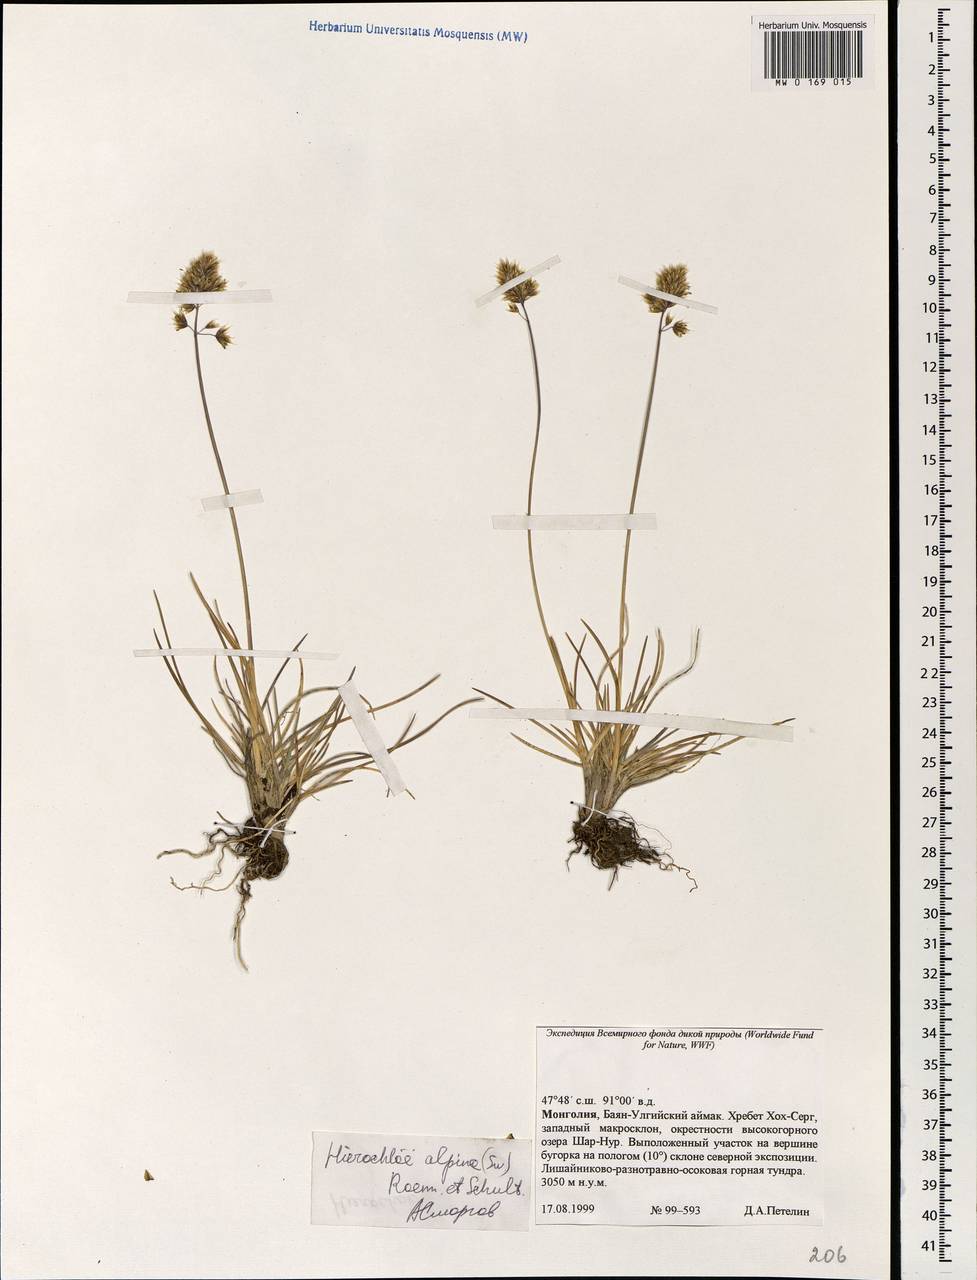 Anthoxanthum monticola (Bigelow) Veldkamp, Mongolia (MONG) (Mongolia)